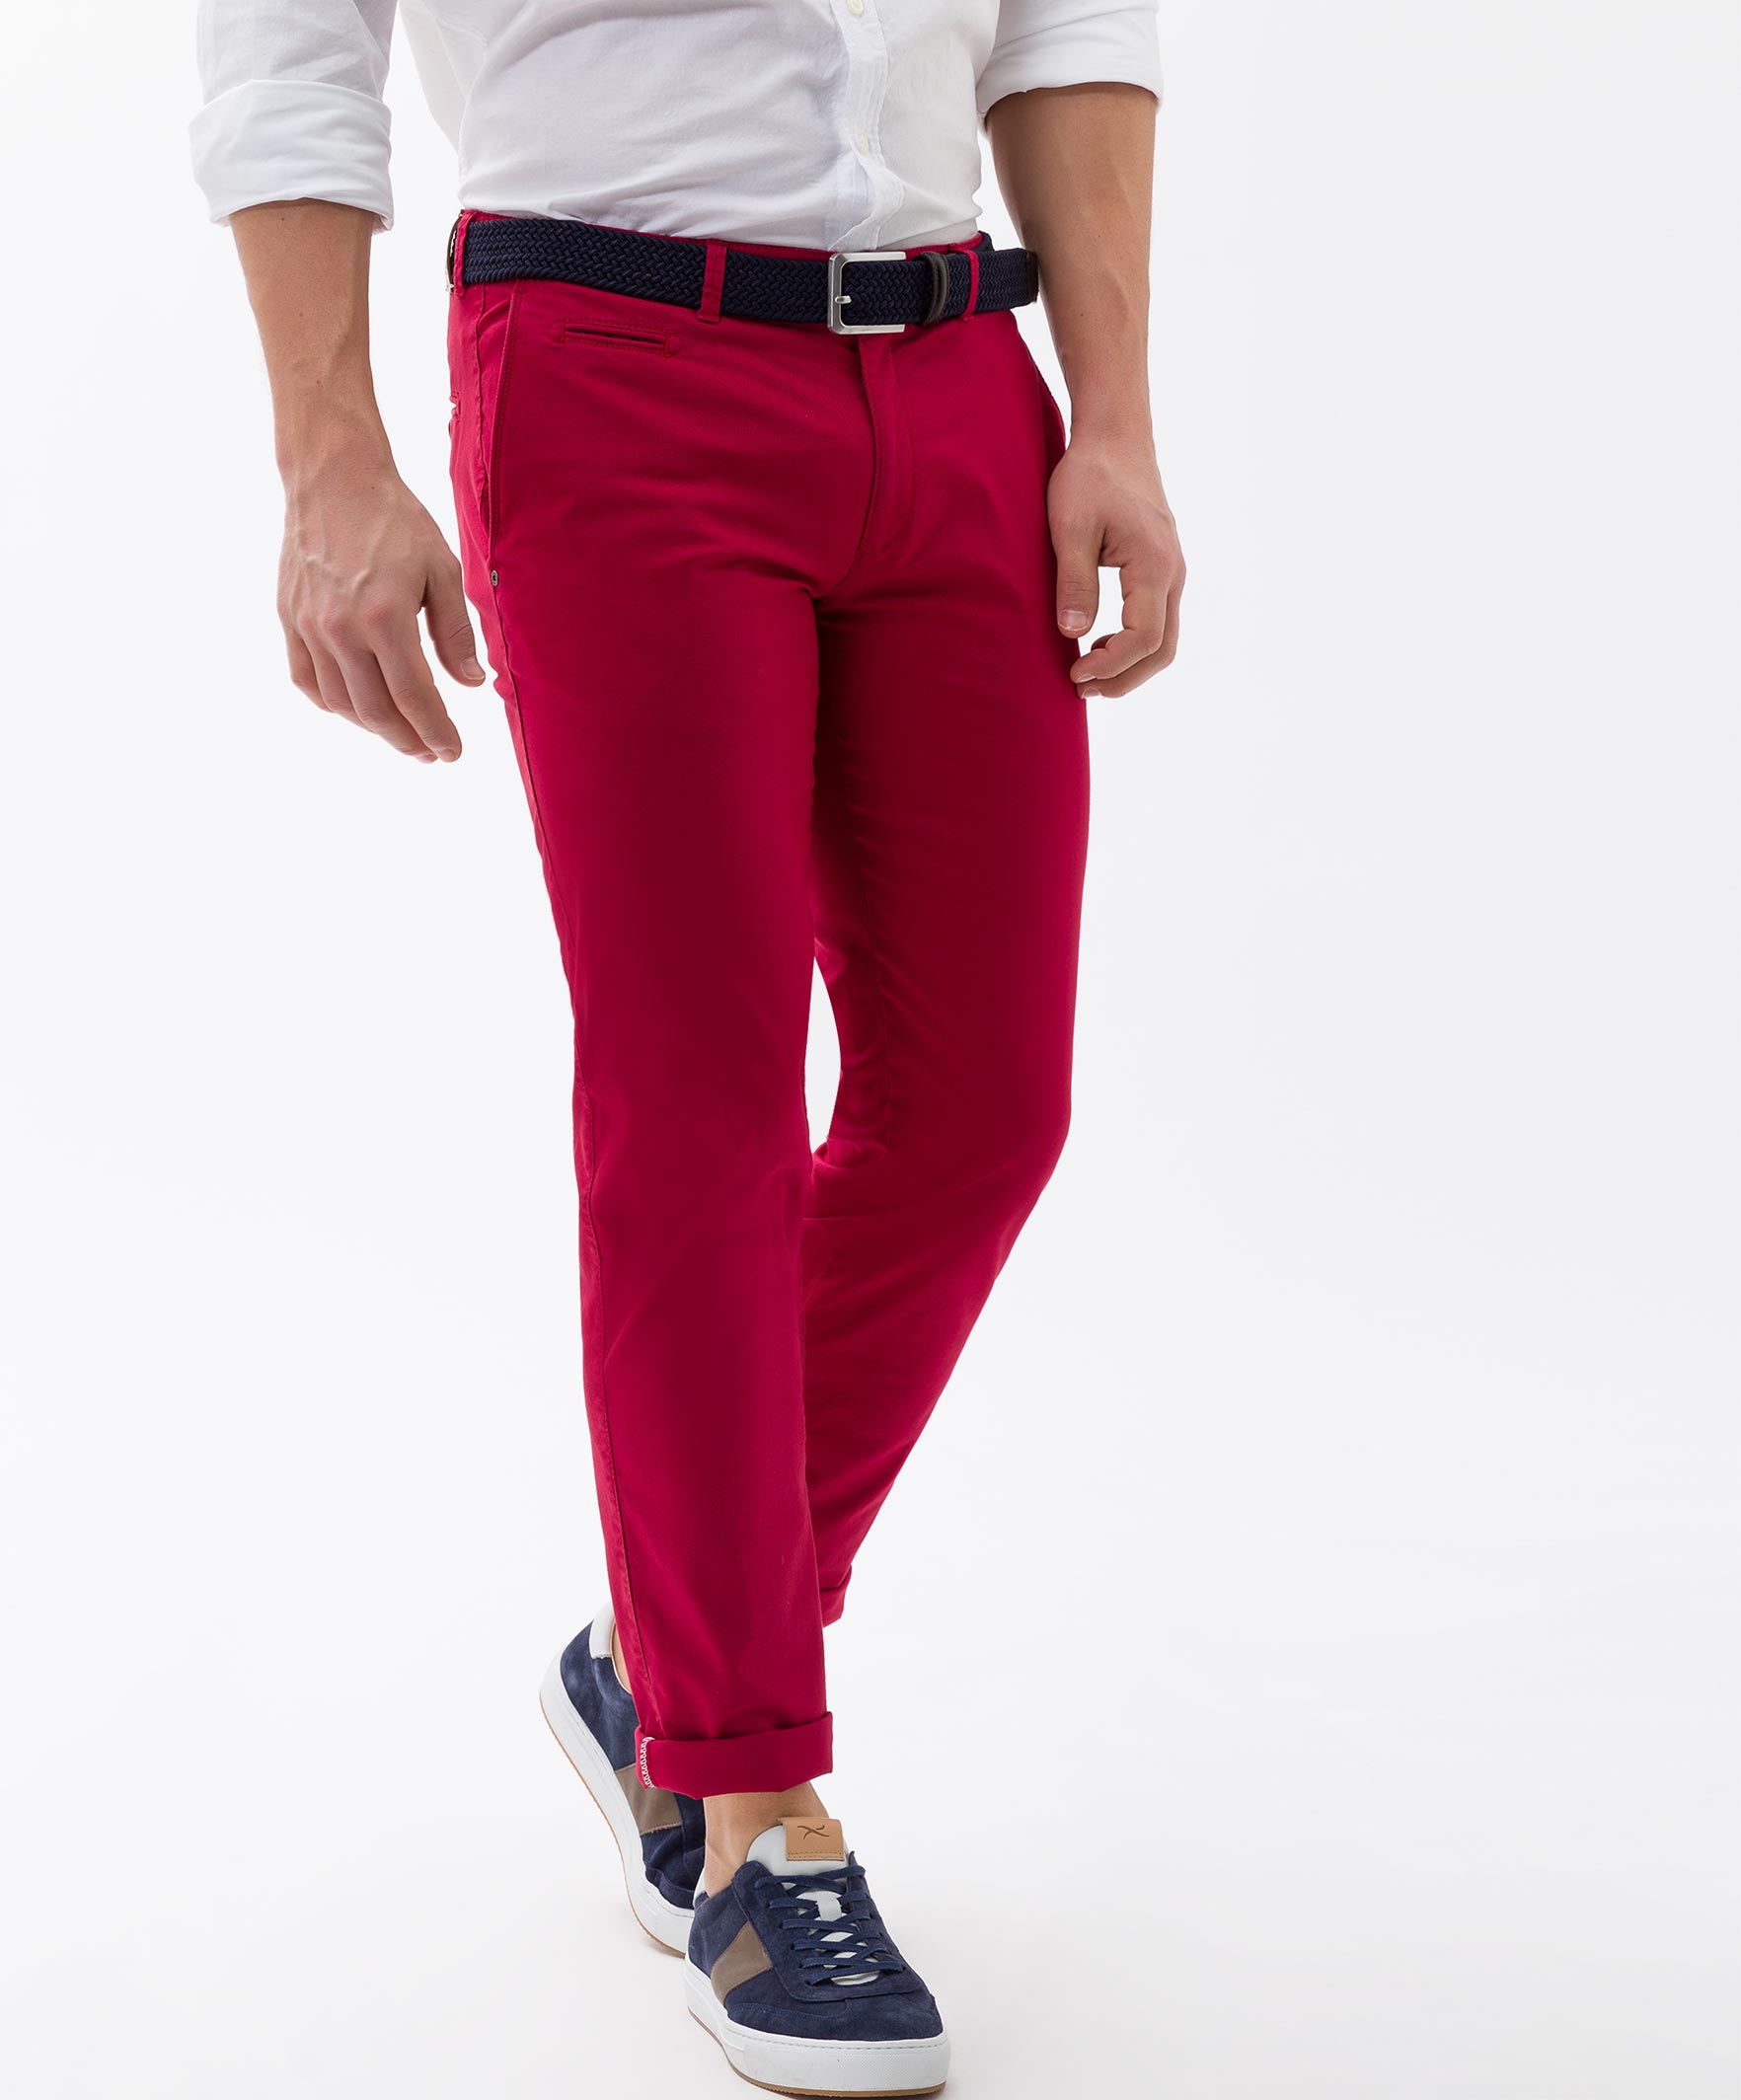 Brax Fabio In Hi-Flex Pants Red Melange | Jan Rozing Men's Fashion